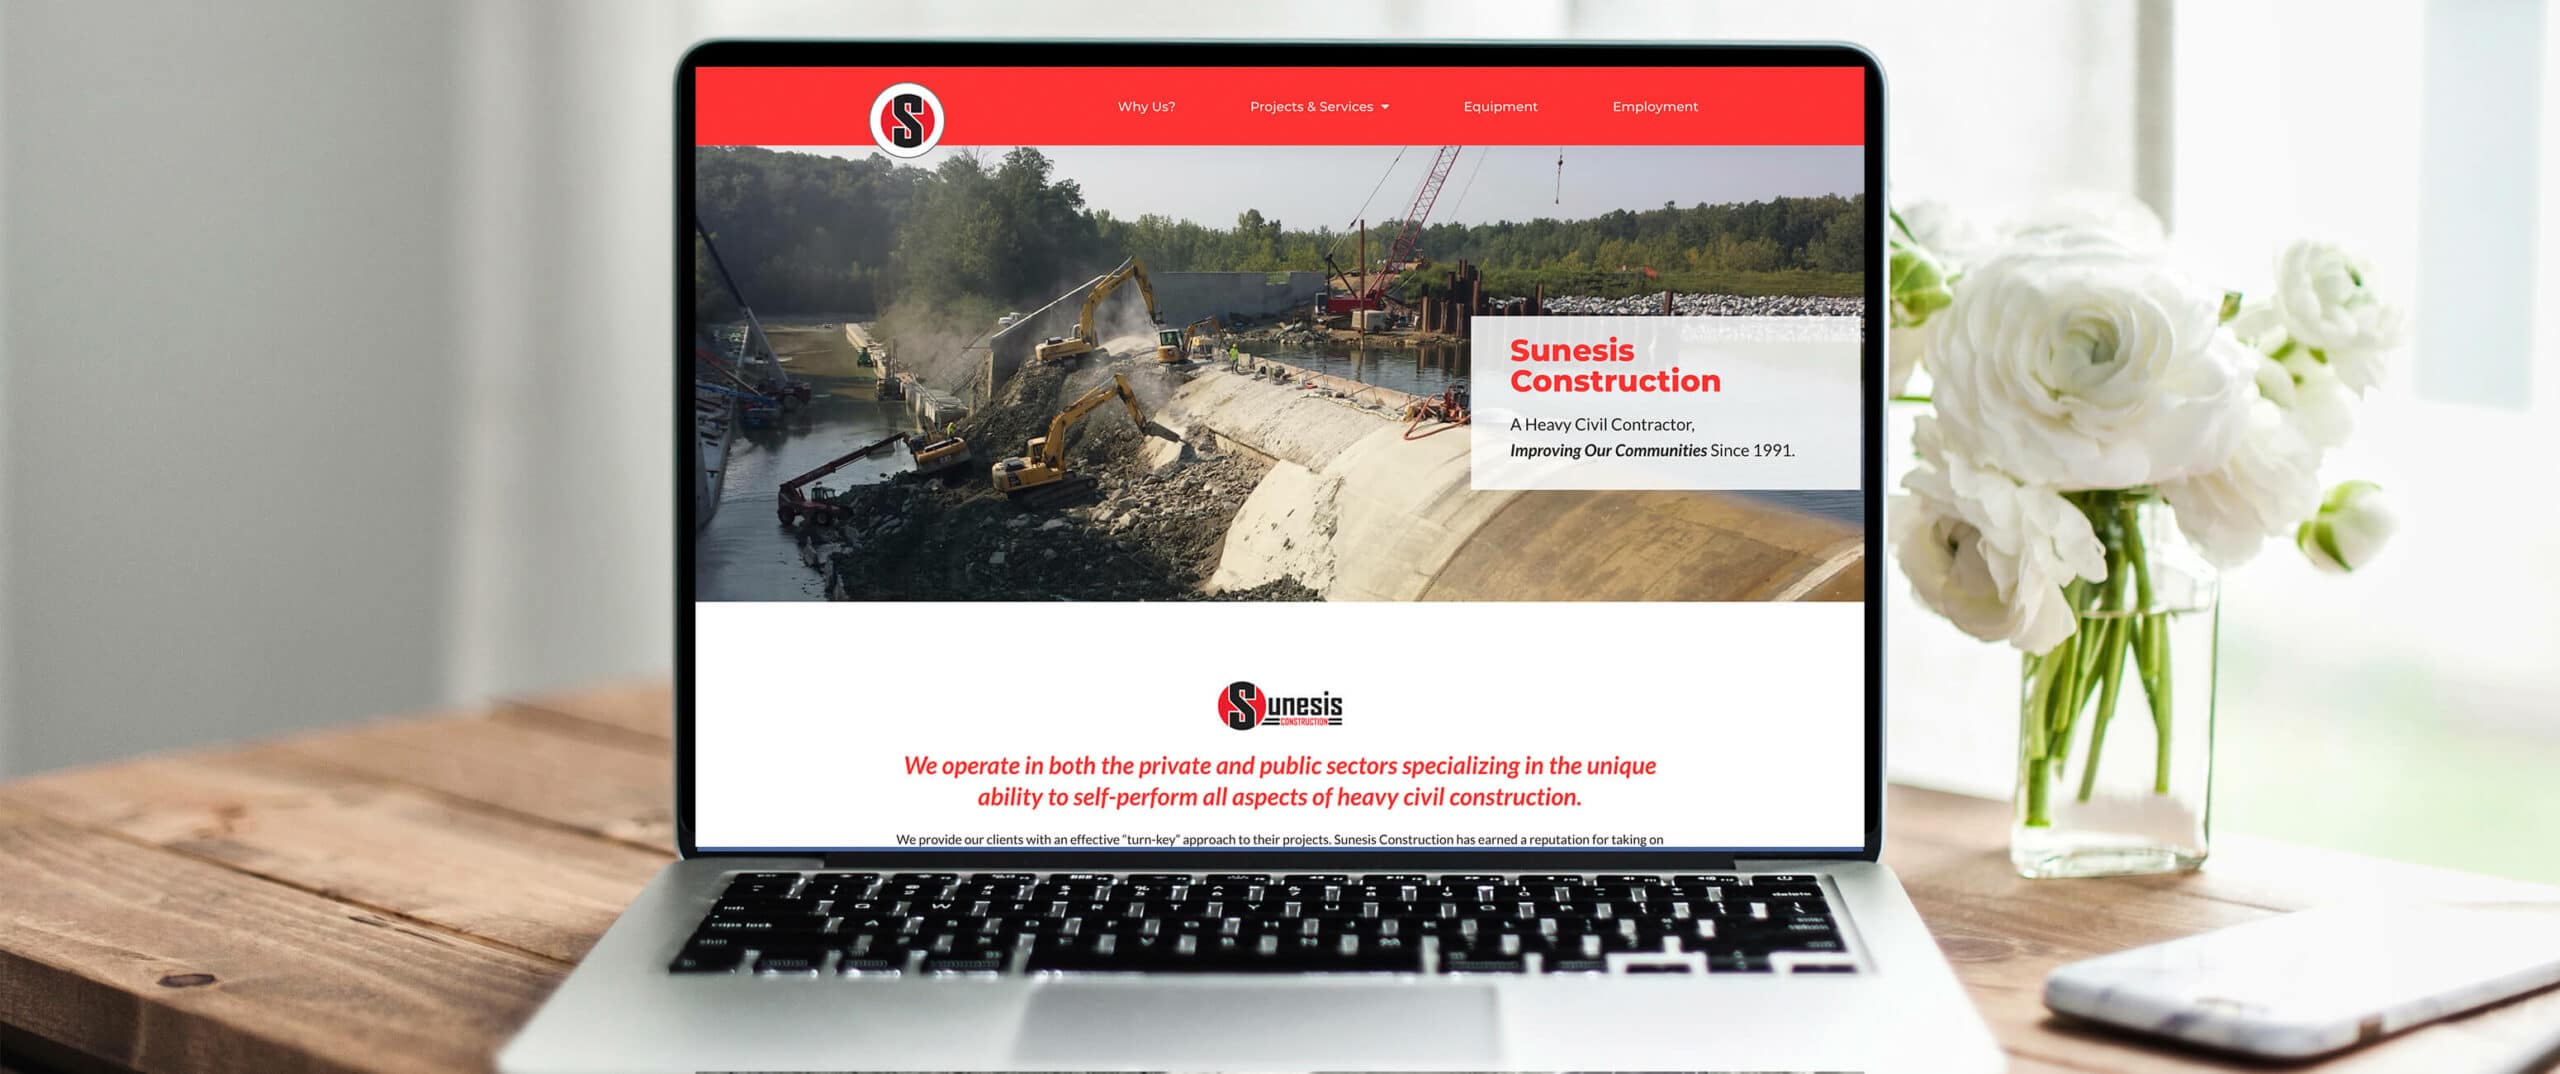 Sunesis Construction Website - Construction Website Example and Portfolio